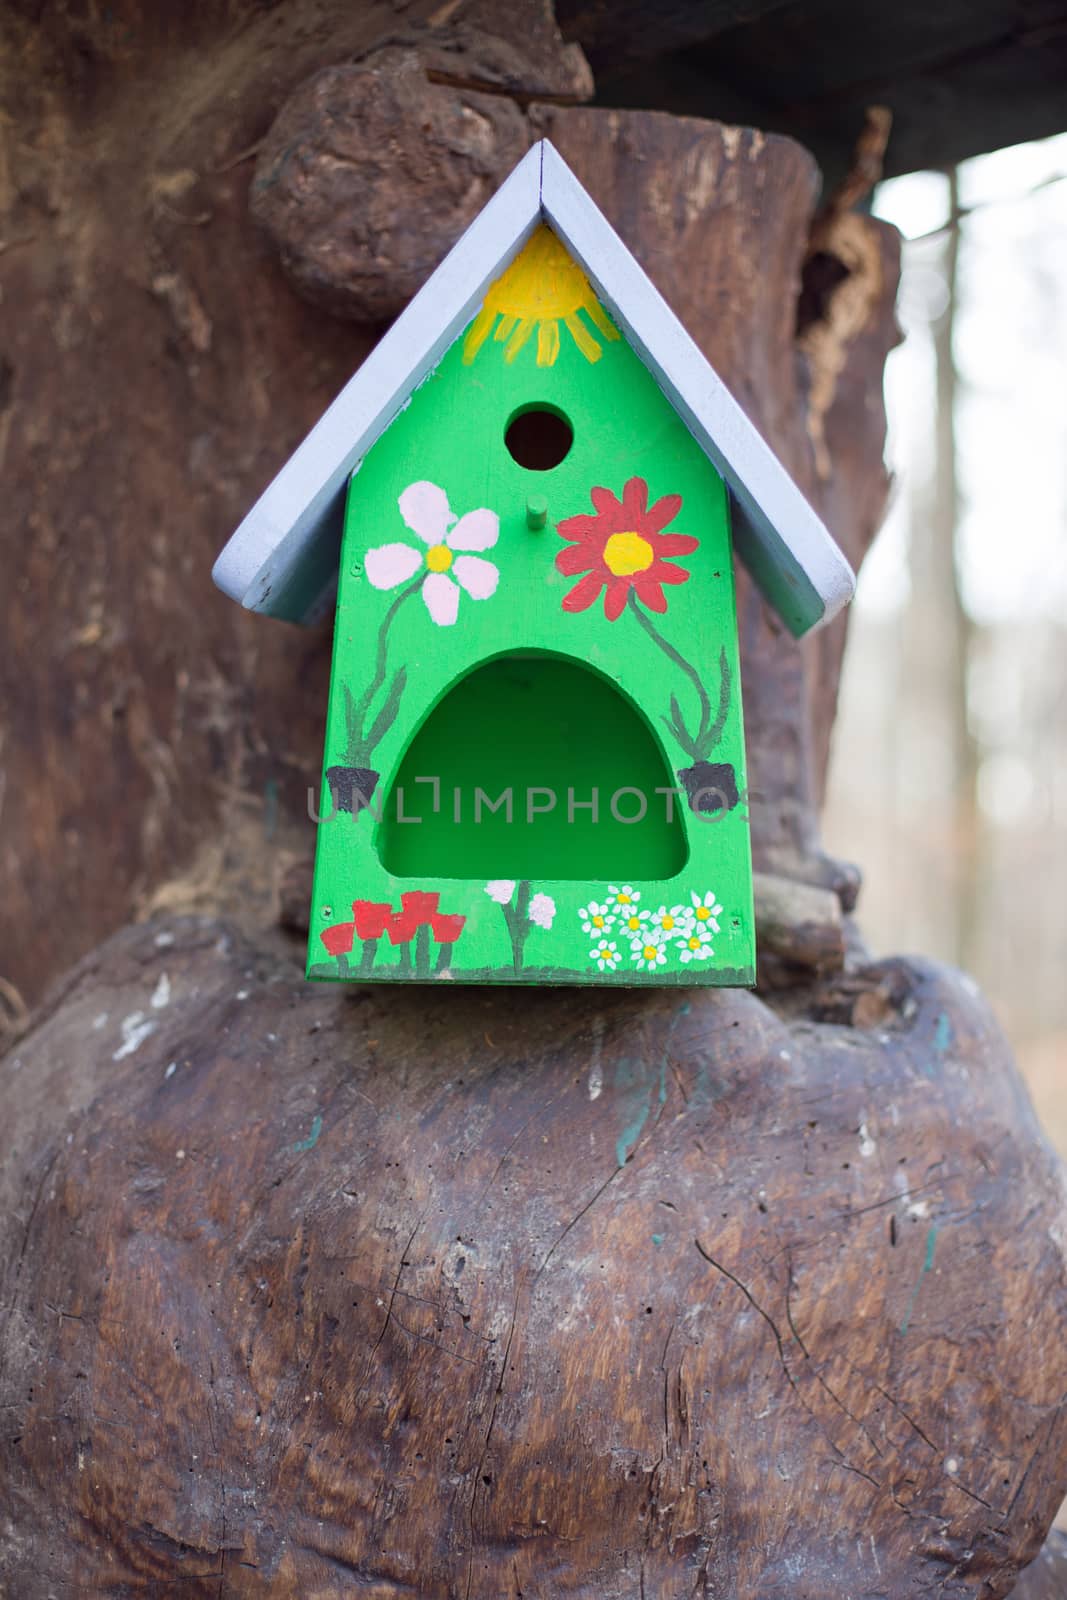 One little bird house on a tree trunk